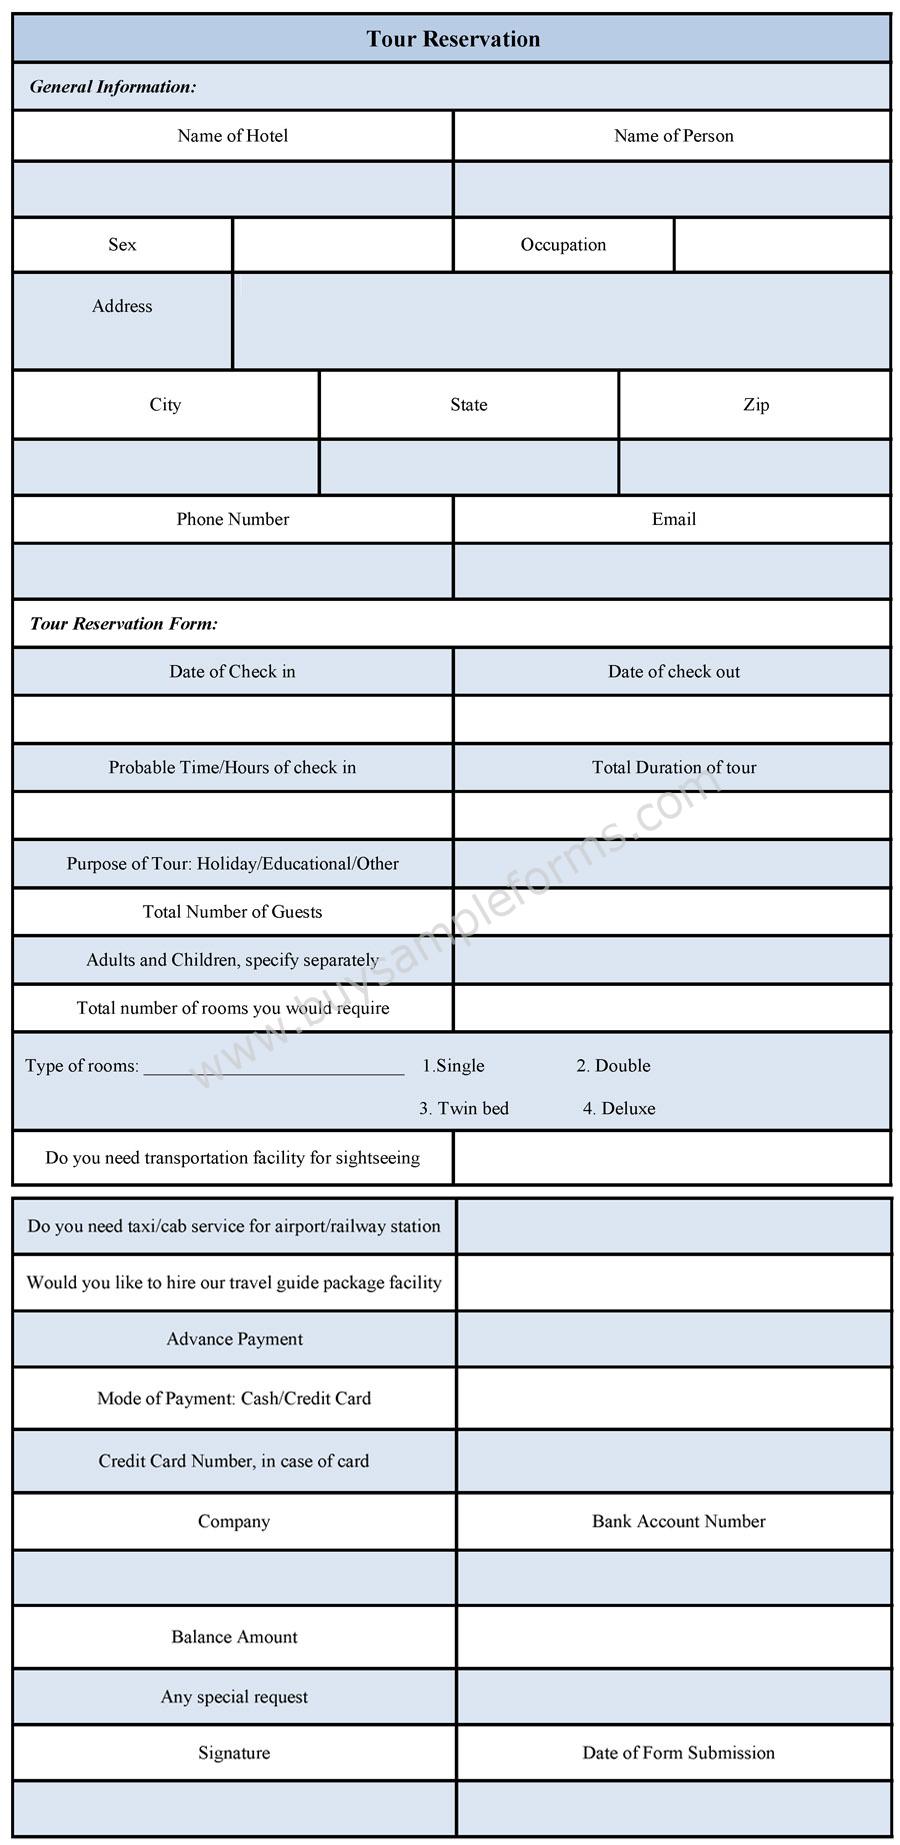 format of tour reservation form